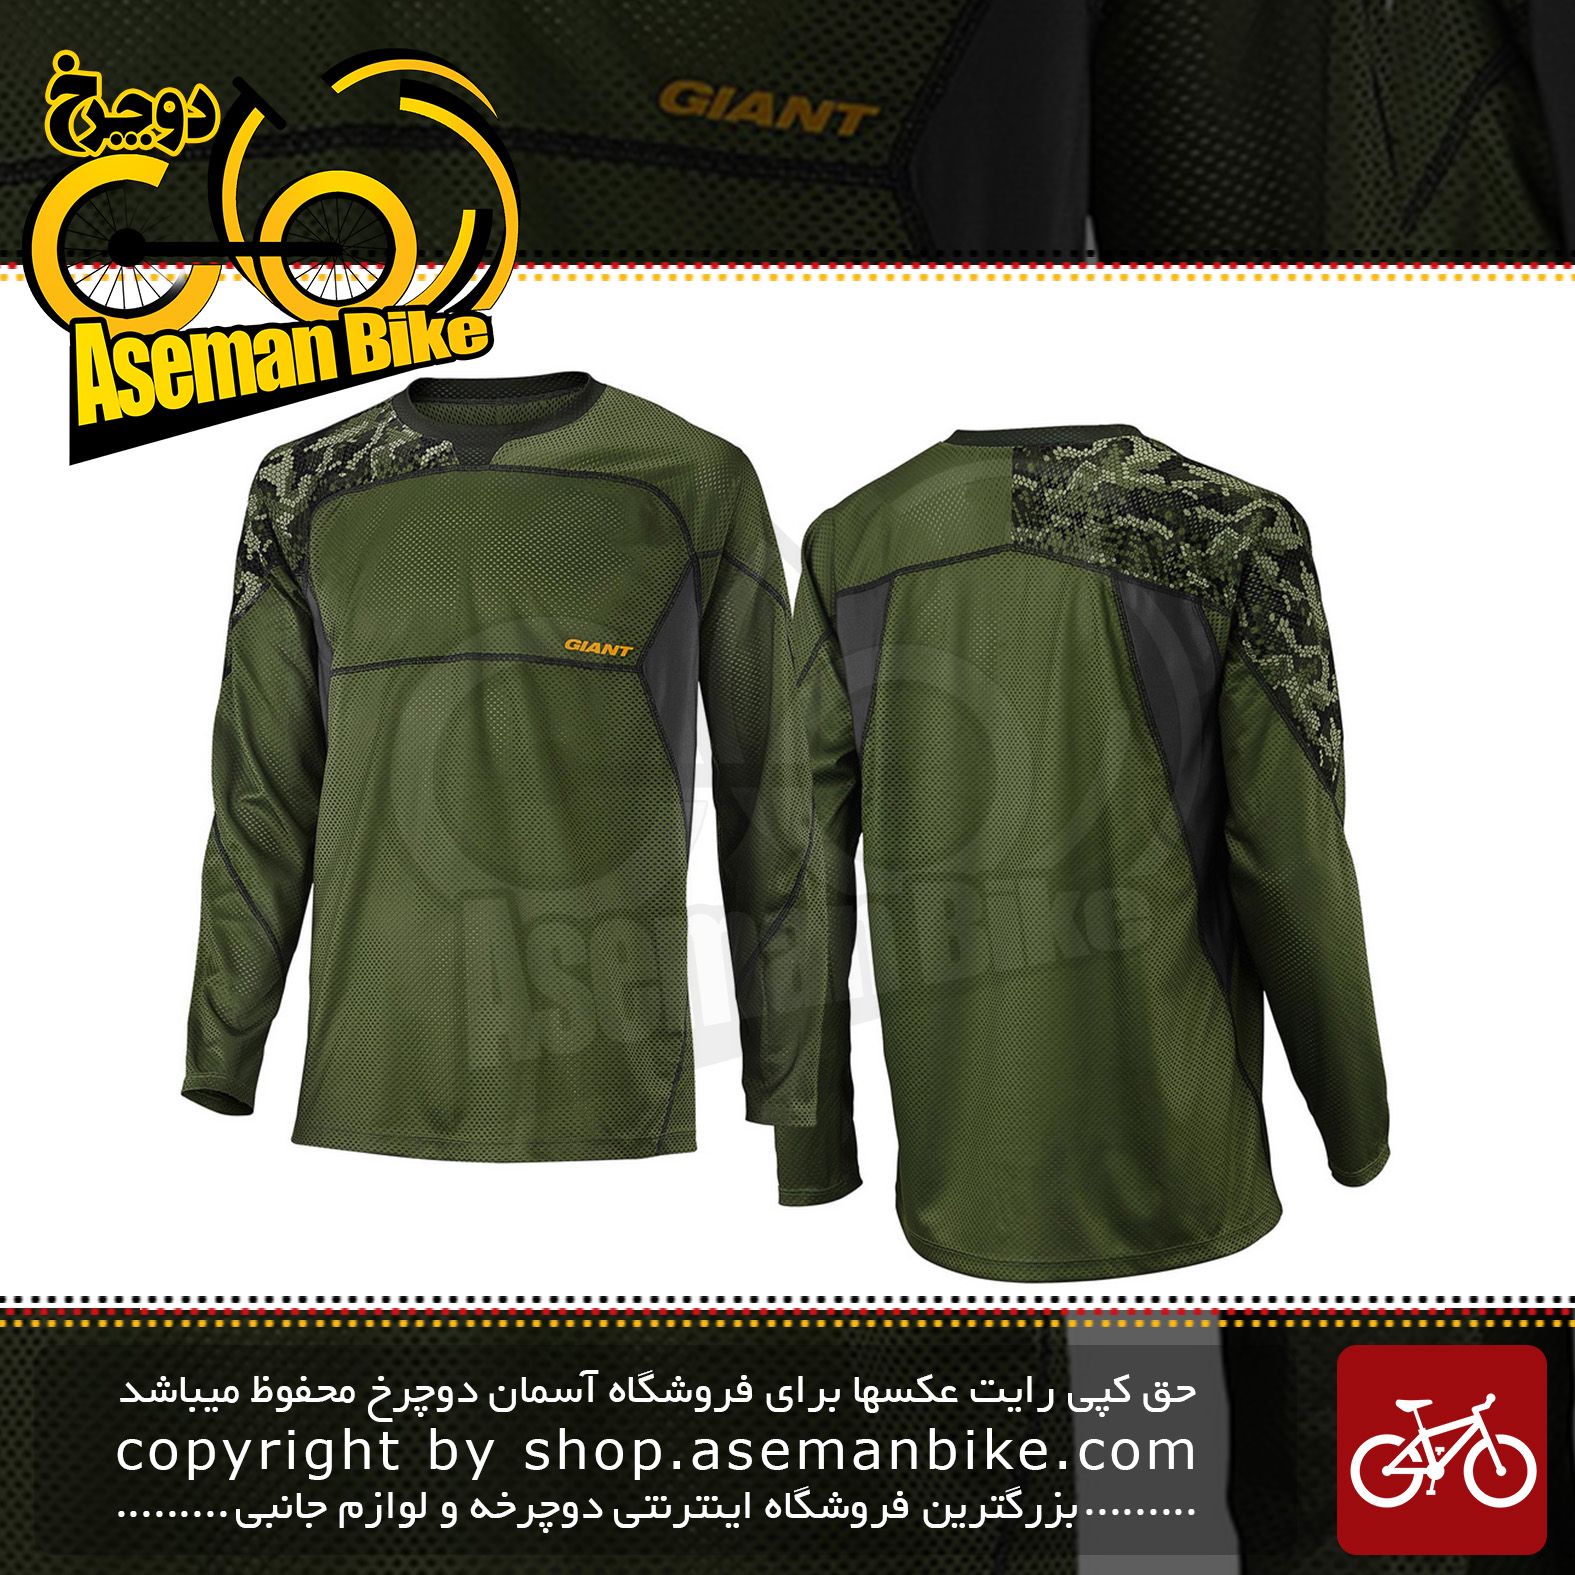 لباس دوچرخه سواری تی شرت برند جاینت مدل ریلم آستین بلند سبز سایز ایکس ایکس لارج Bicycle Giant Realm Long Sleeve Jersey Green 2XL